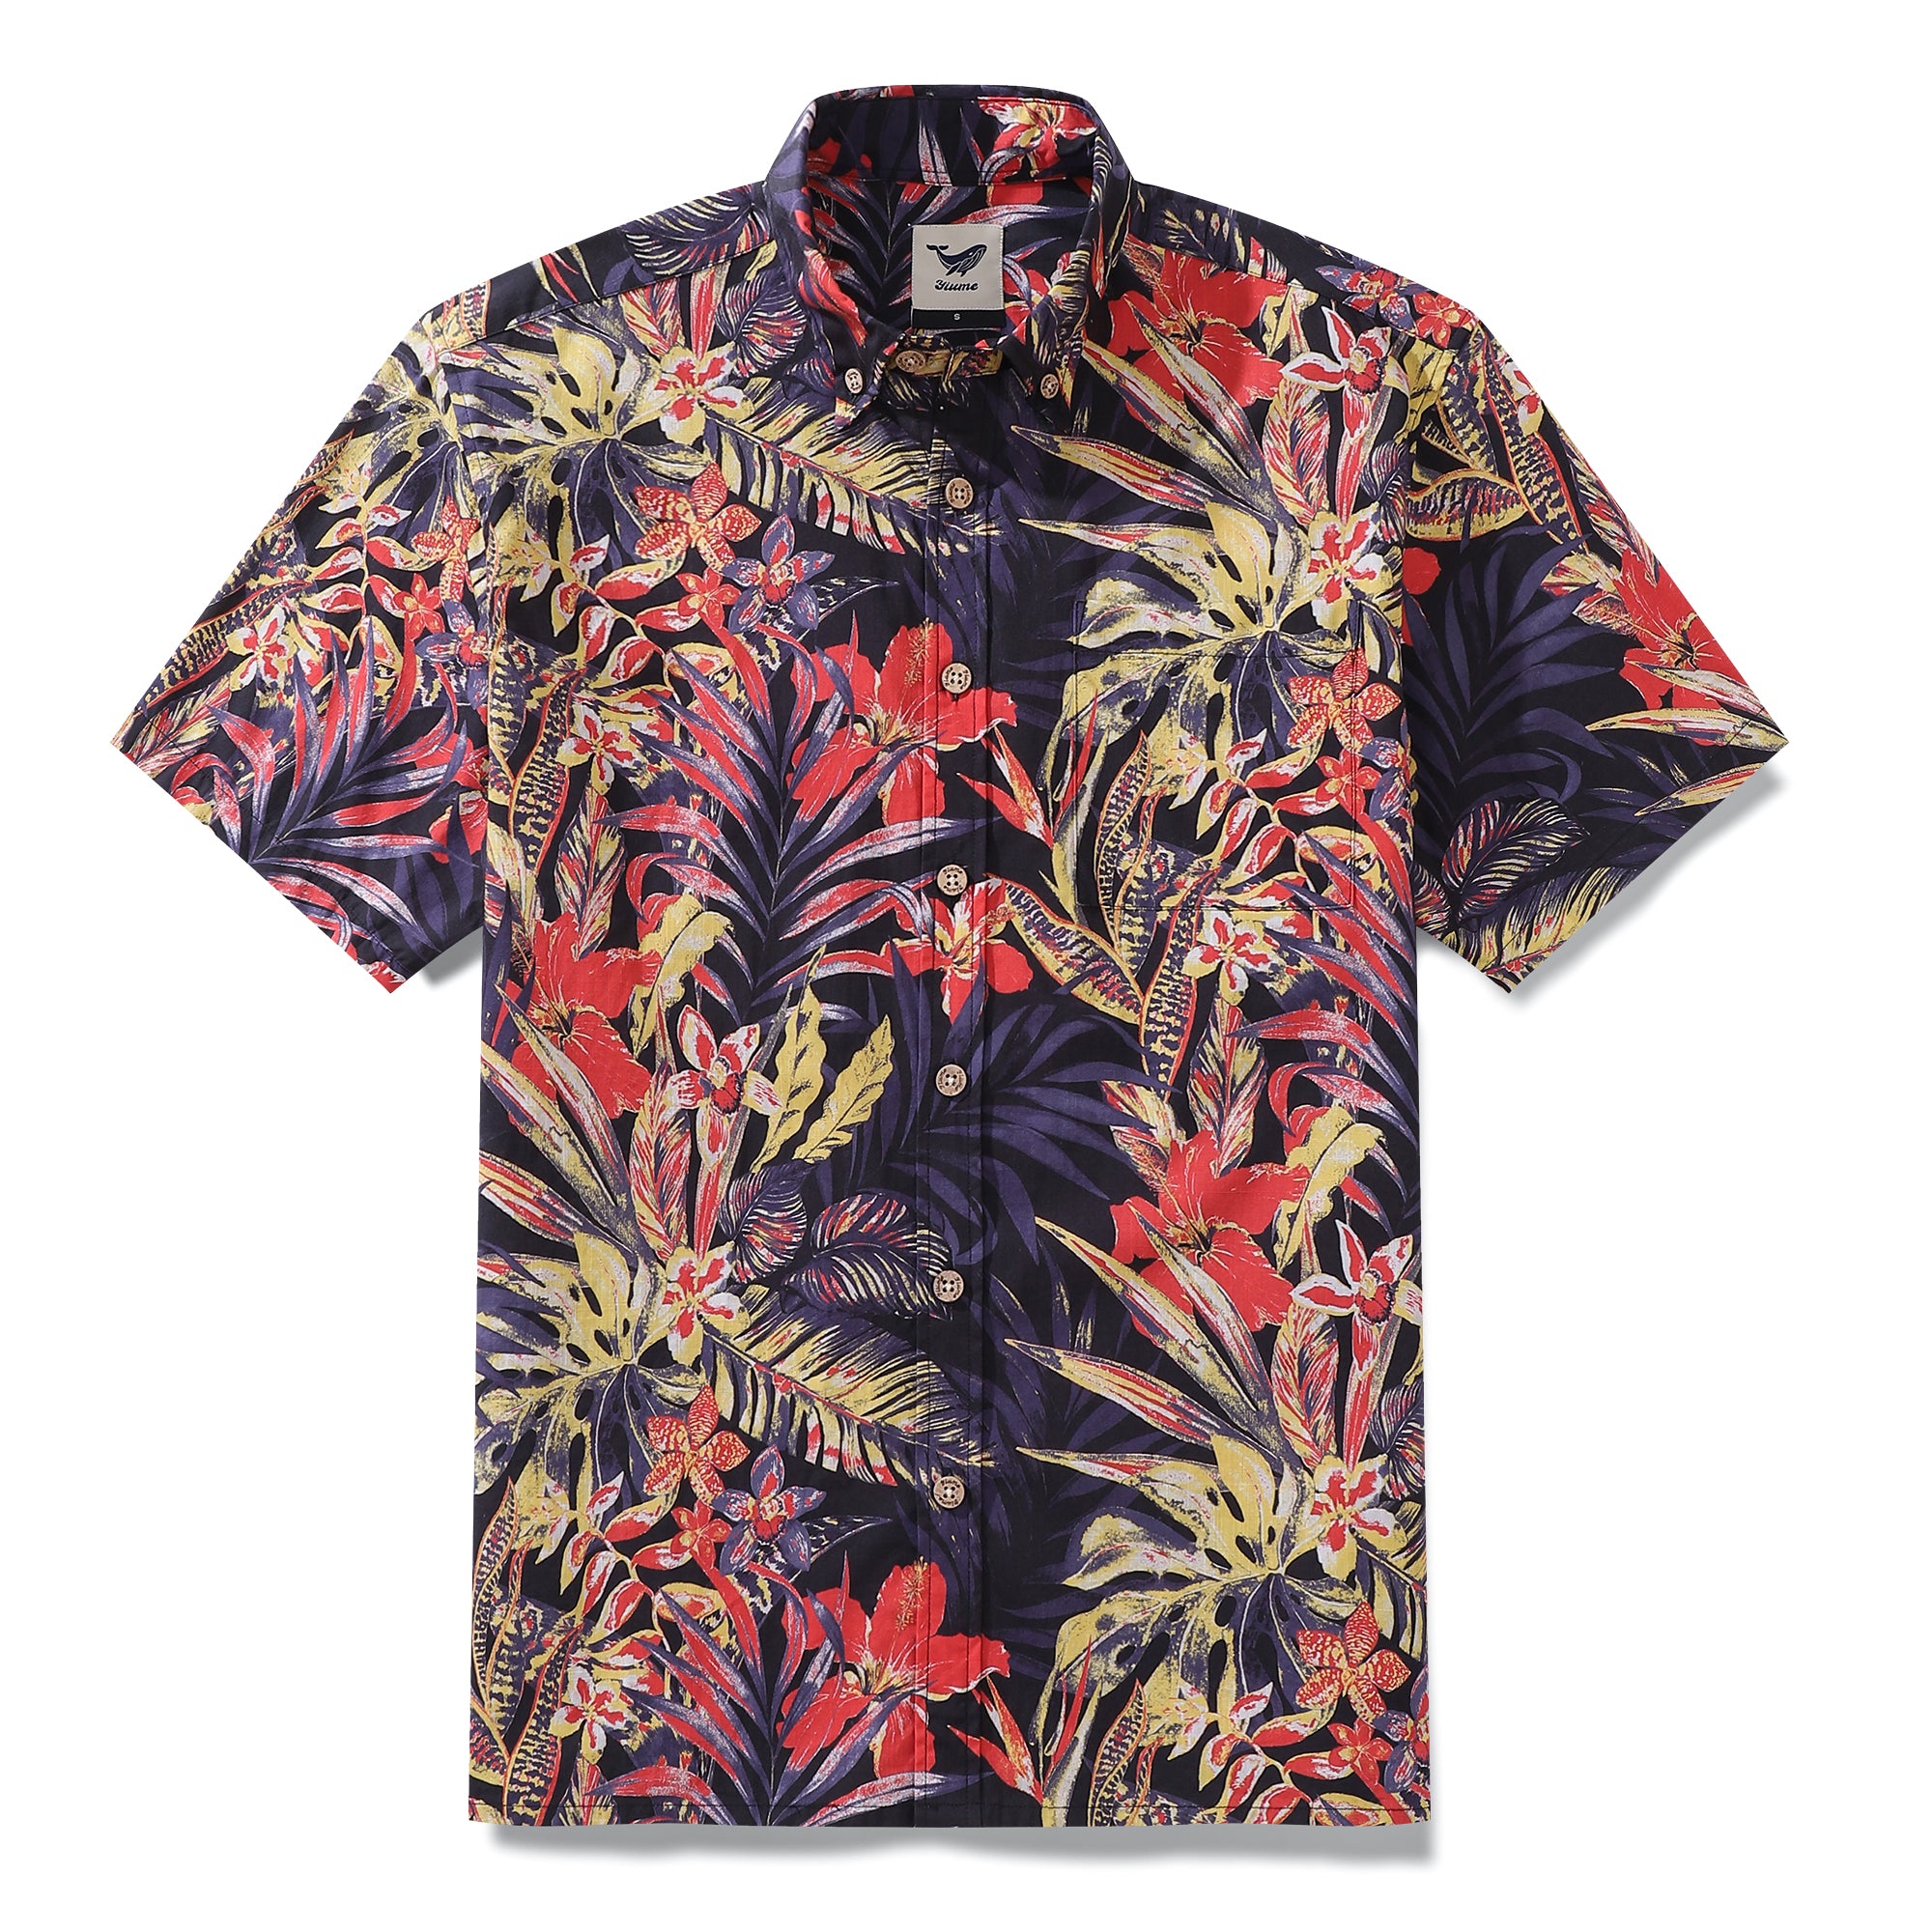 Men's Hawaiian Shirt Summer Night Print Cotton Button-down Short Sleev ...